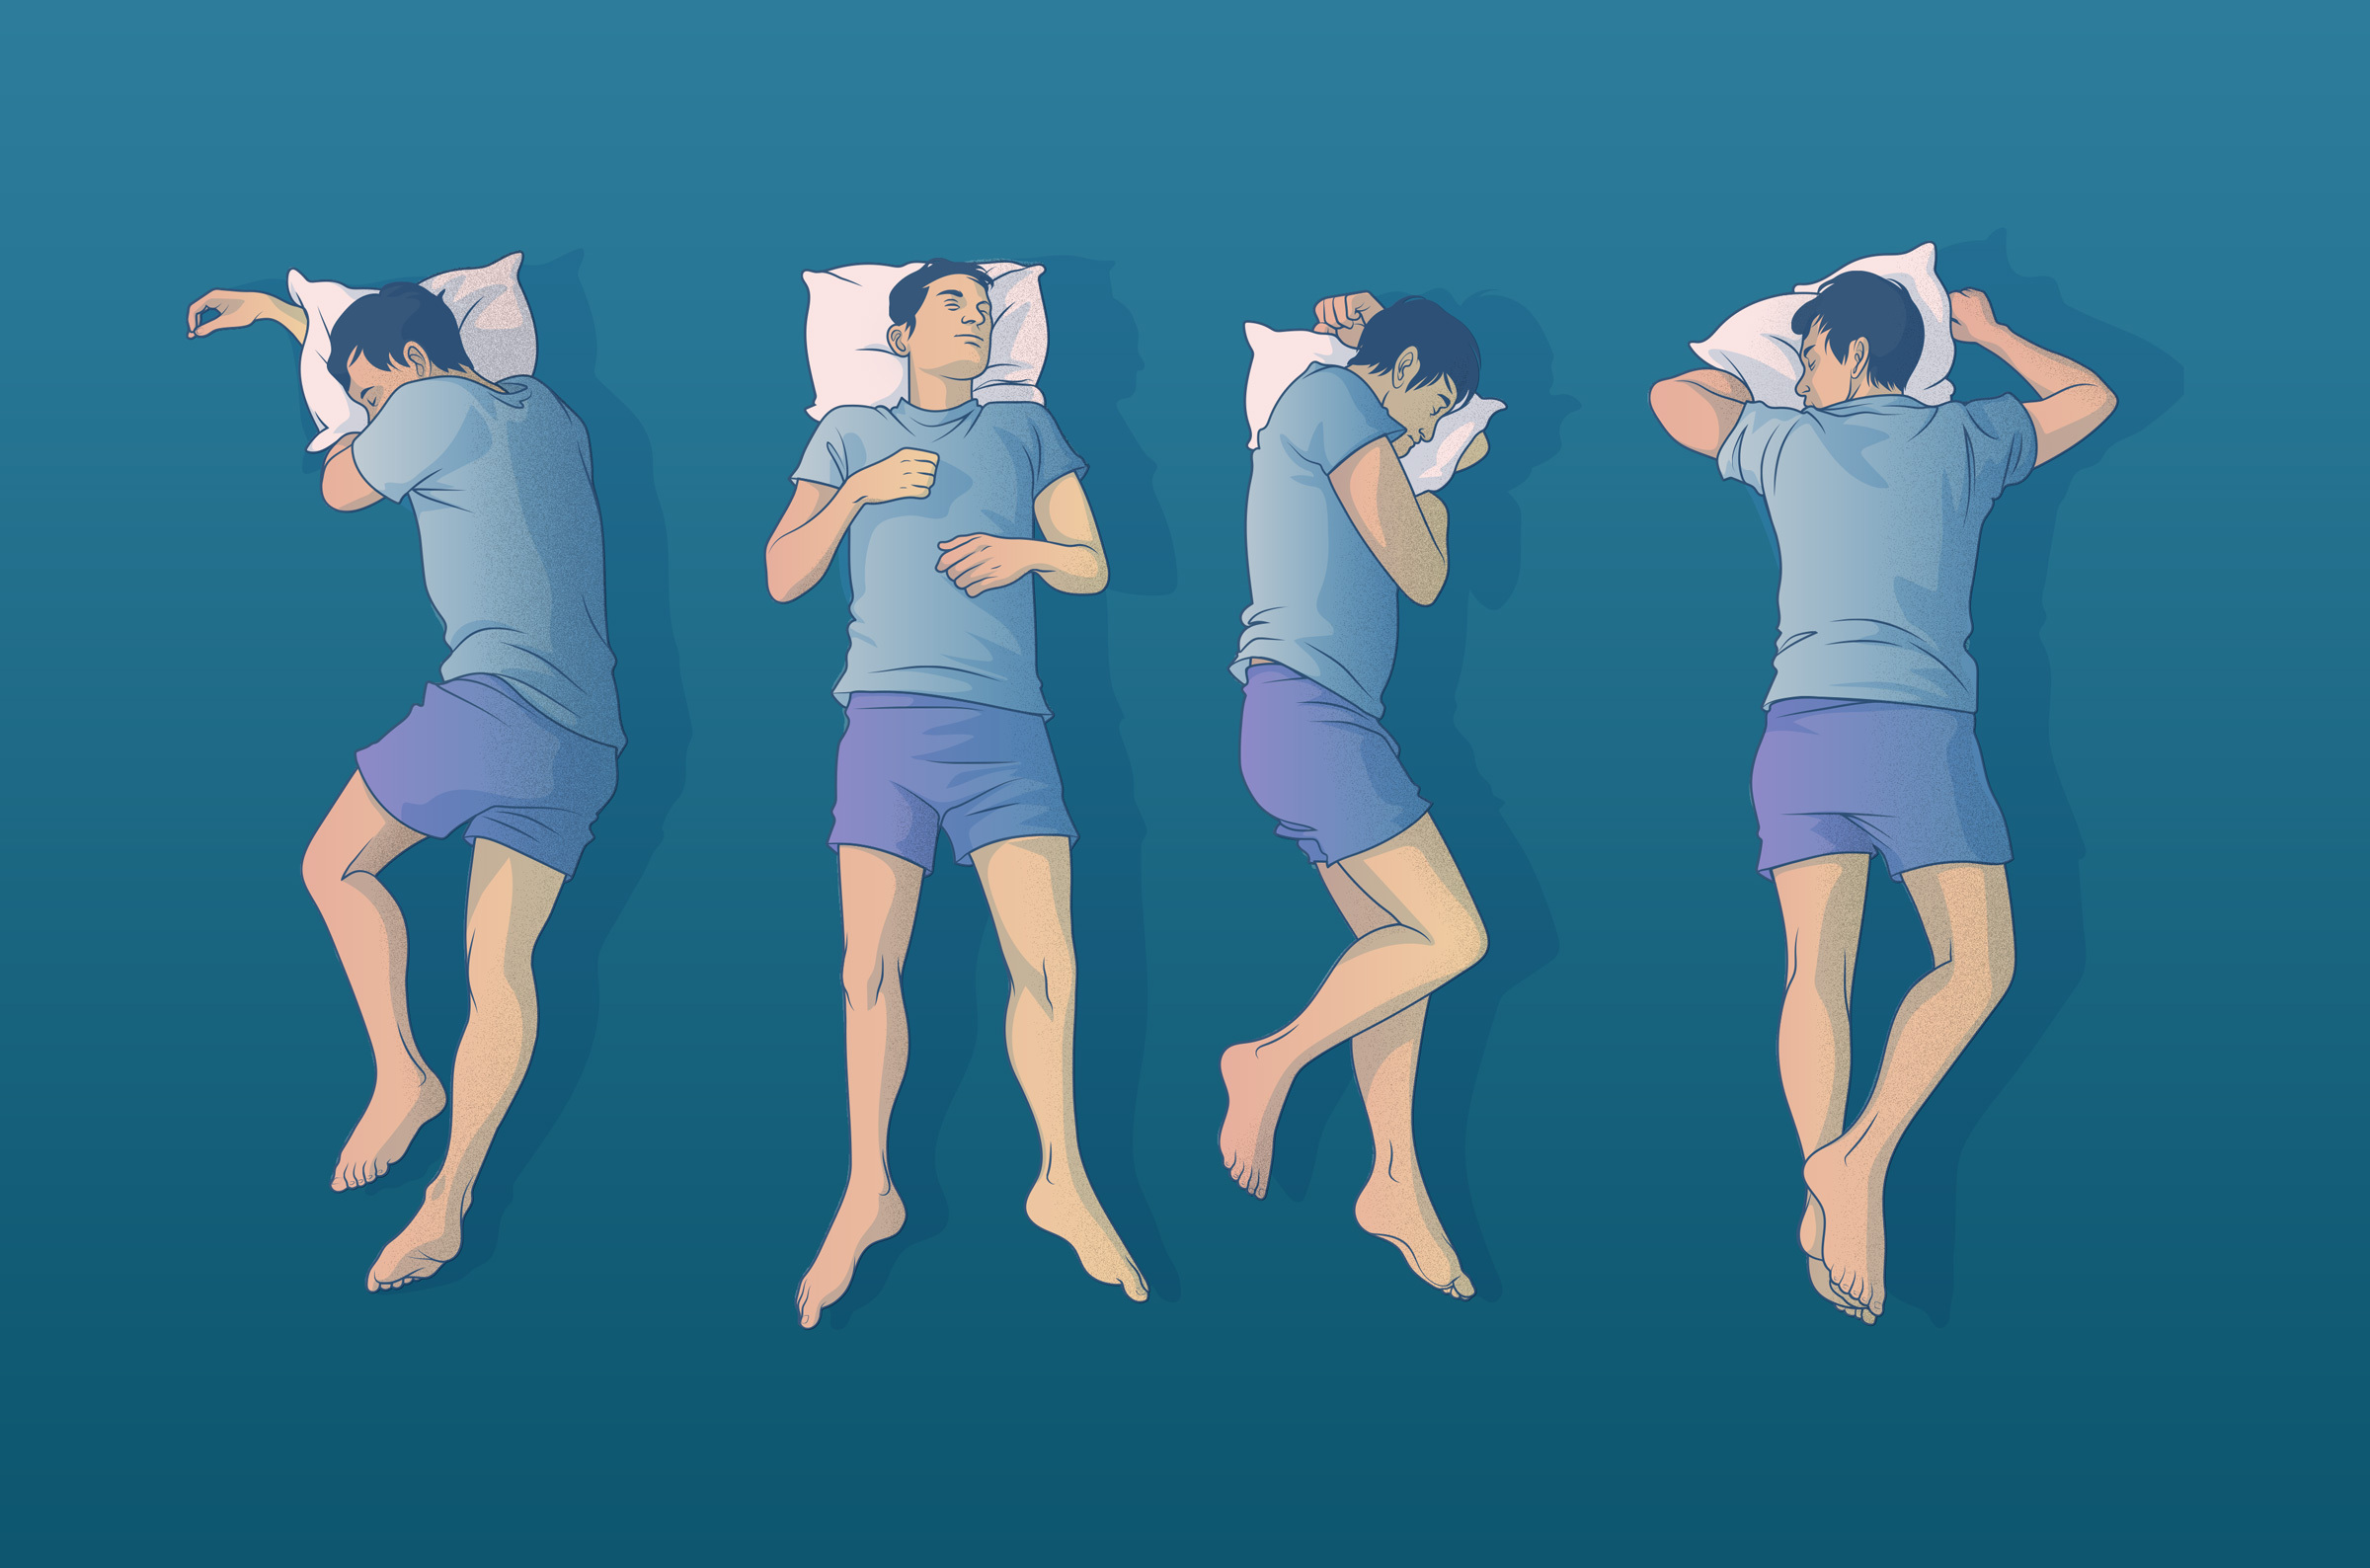 https://www.sleepcycle.com/wp-content/uploads/2022/02/the-sleep-positions-for-sleep-apnea.jpg